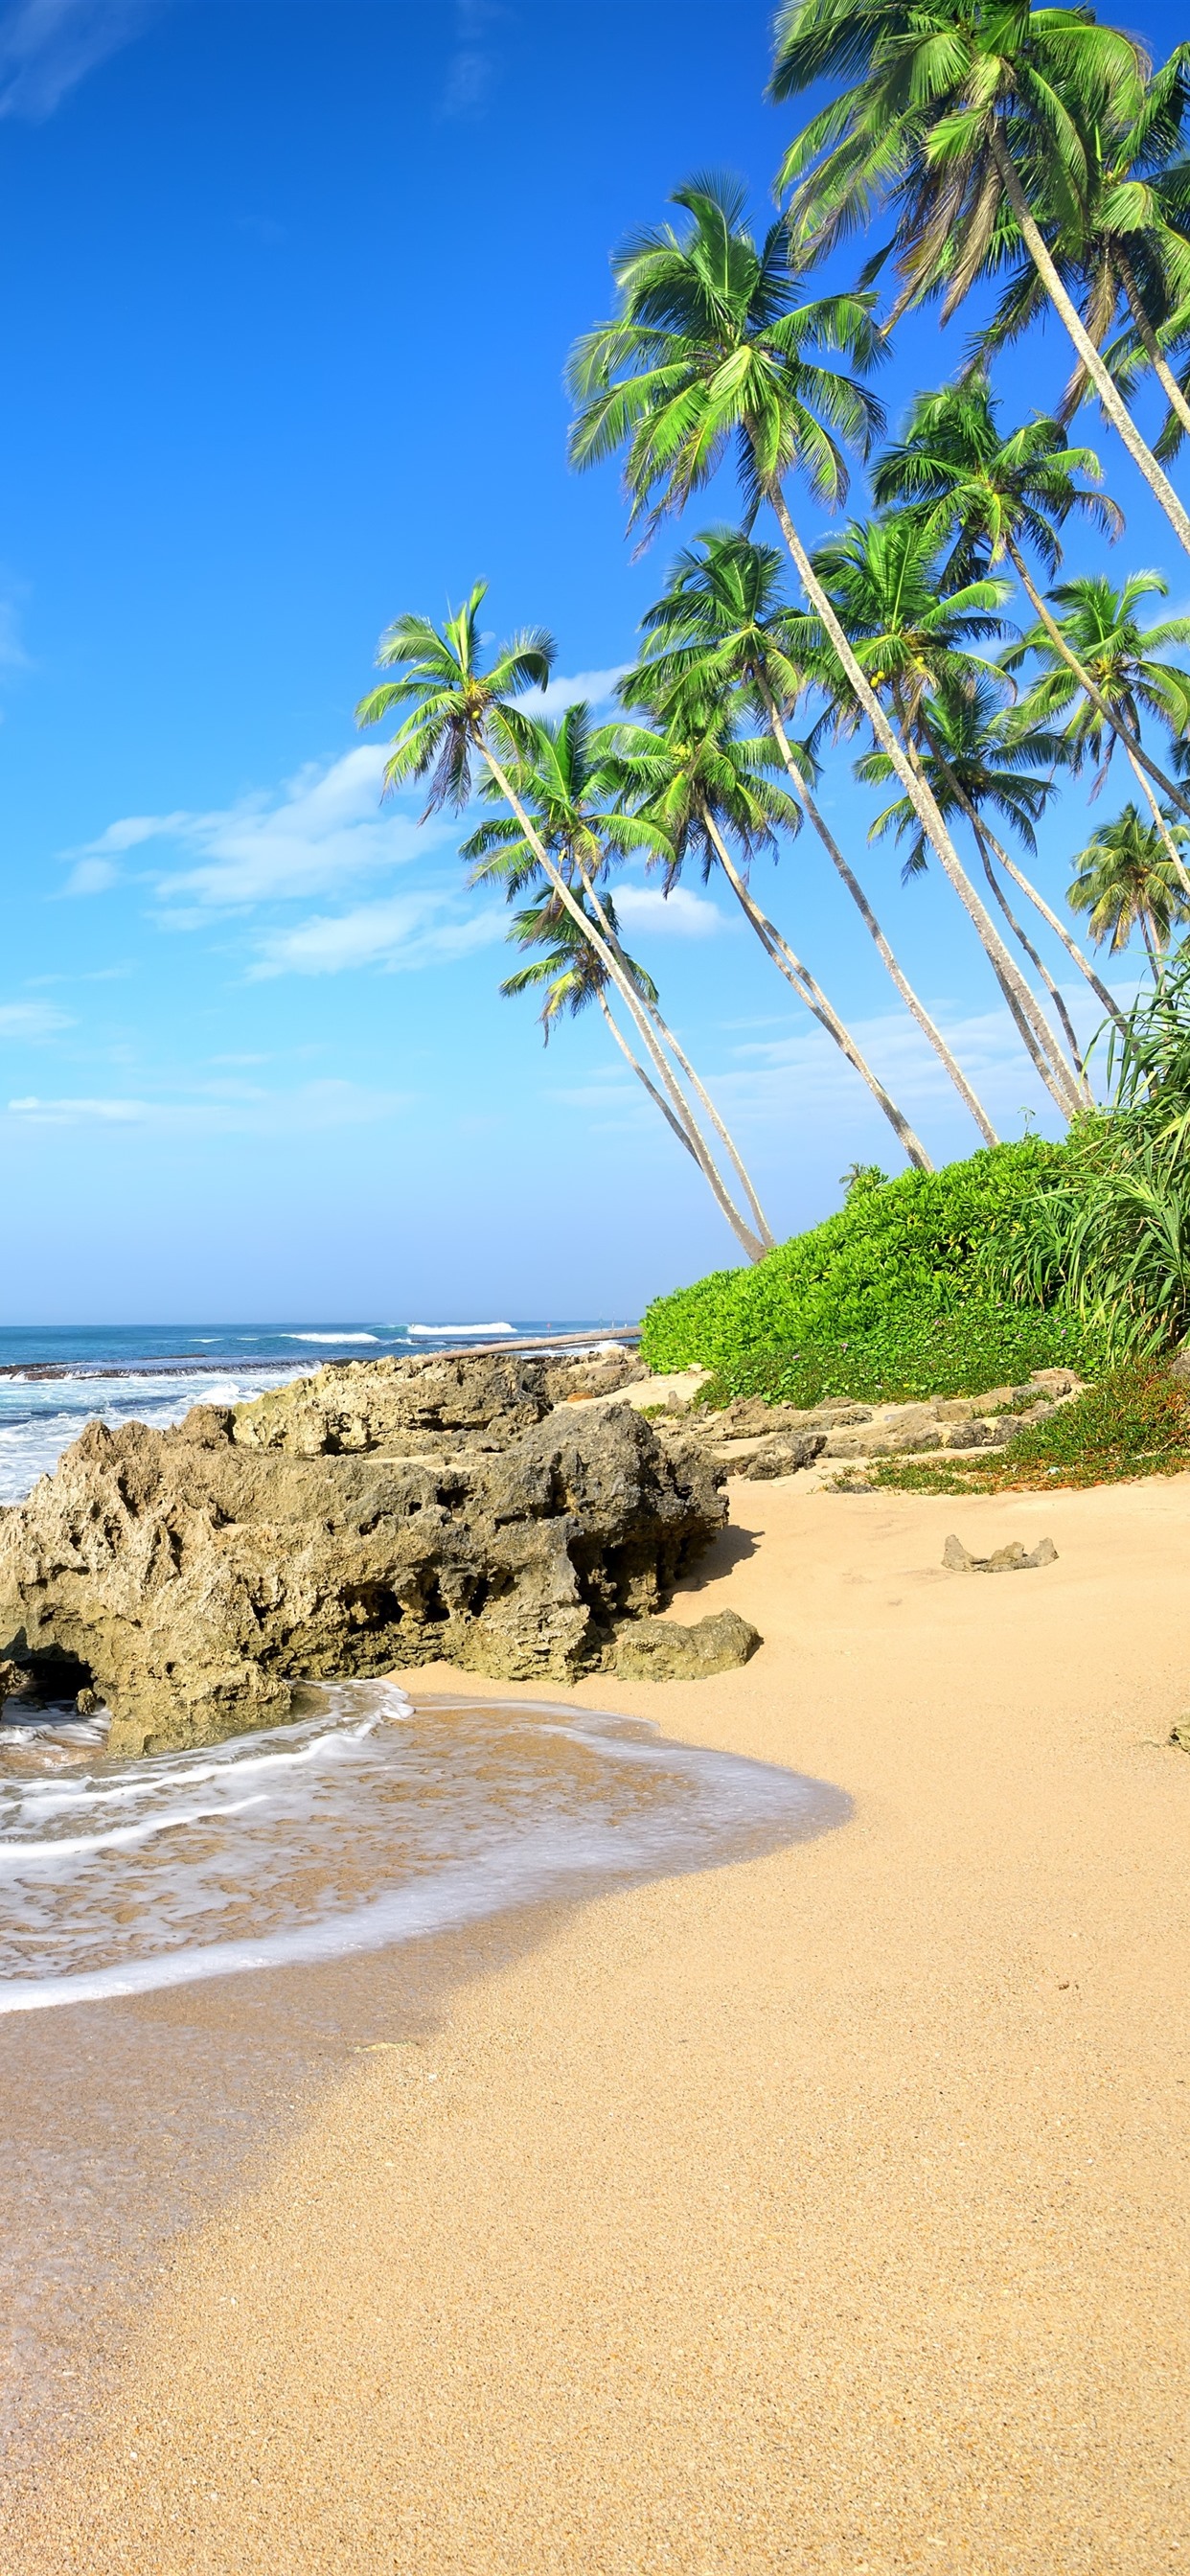 Iphone Wallpaper Palm Trees, Beach, Sea, Waves, Rocks - 21 9 Background Tropical - HD Wallpaper 